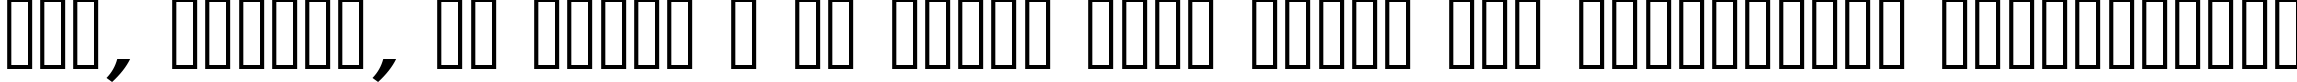 Пример написания шрифтом RivenShield  Italic текста на украинском